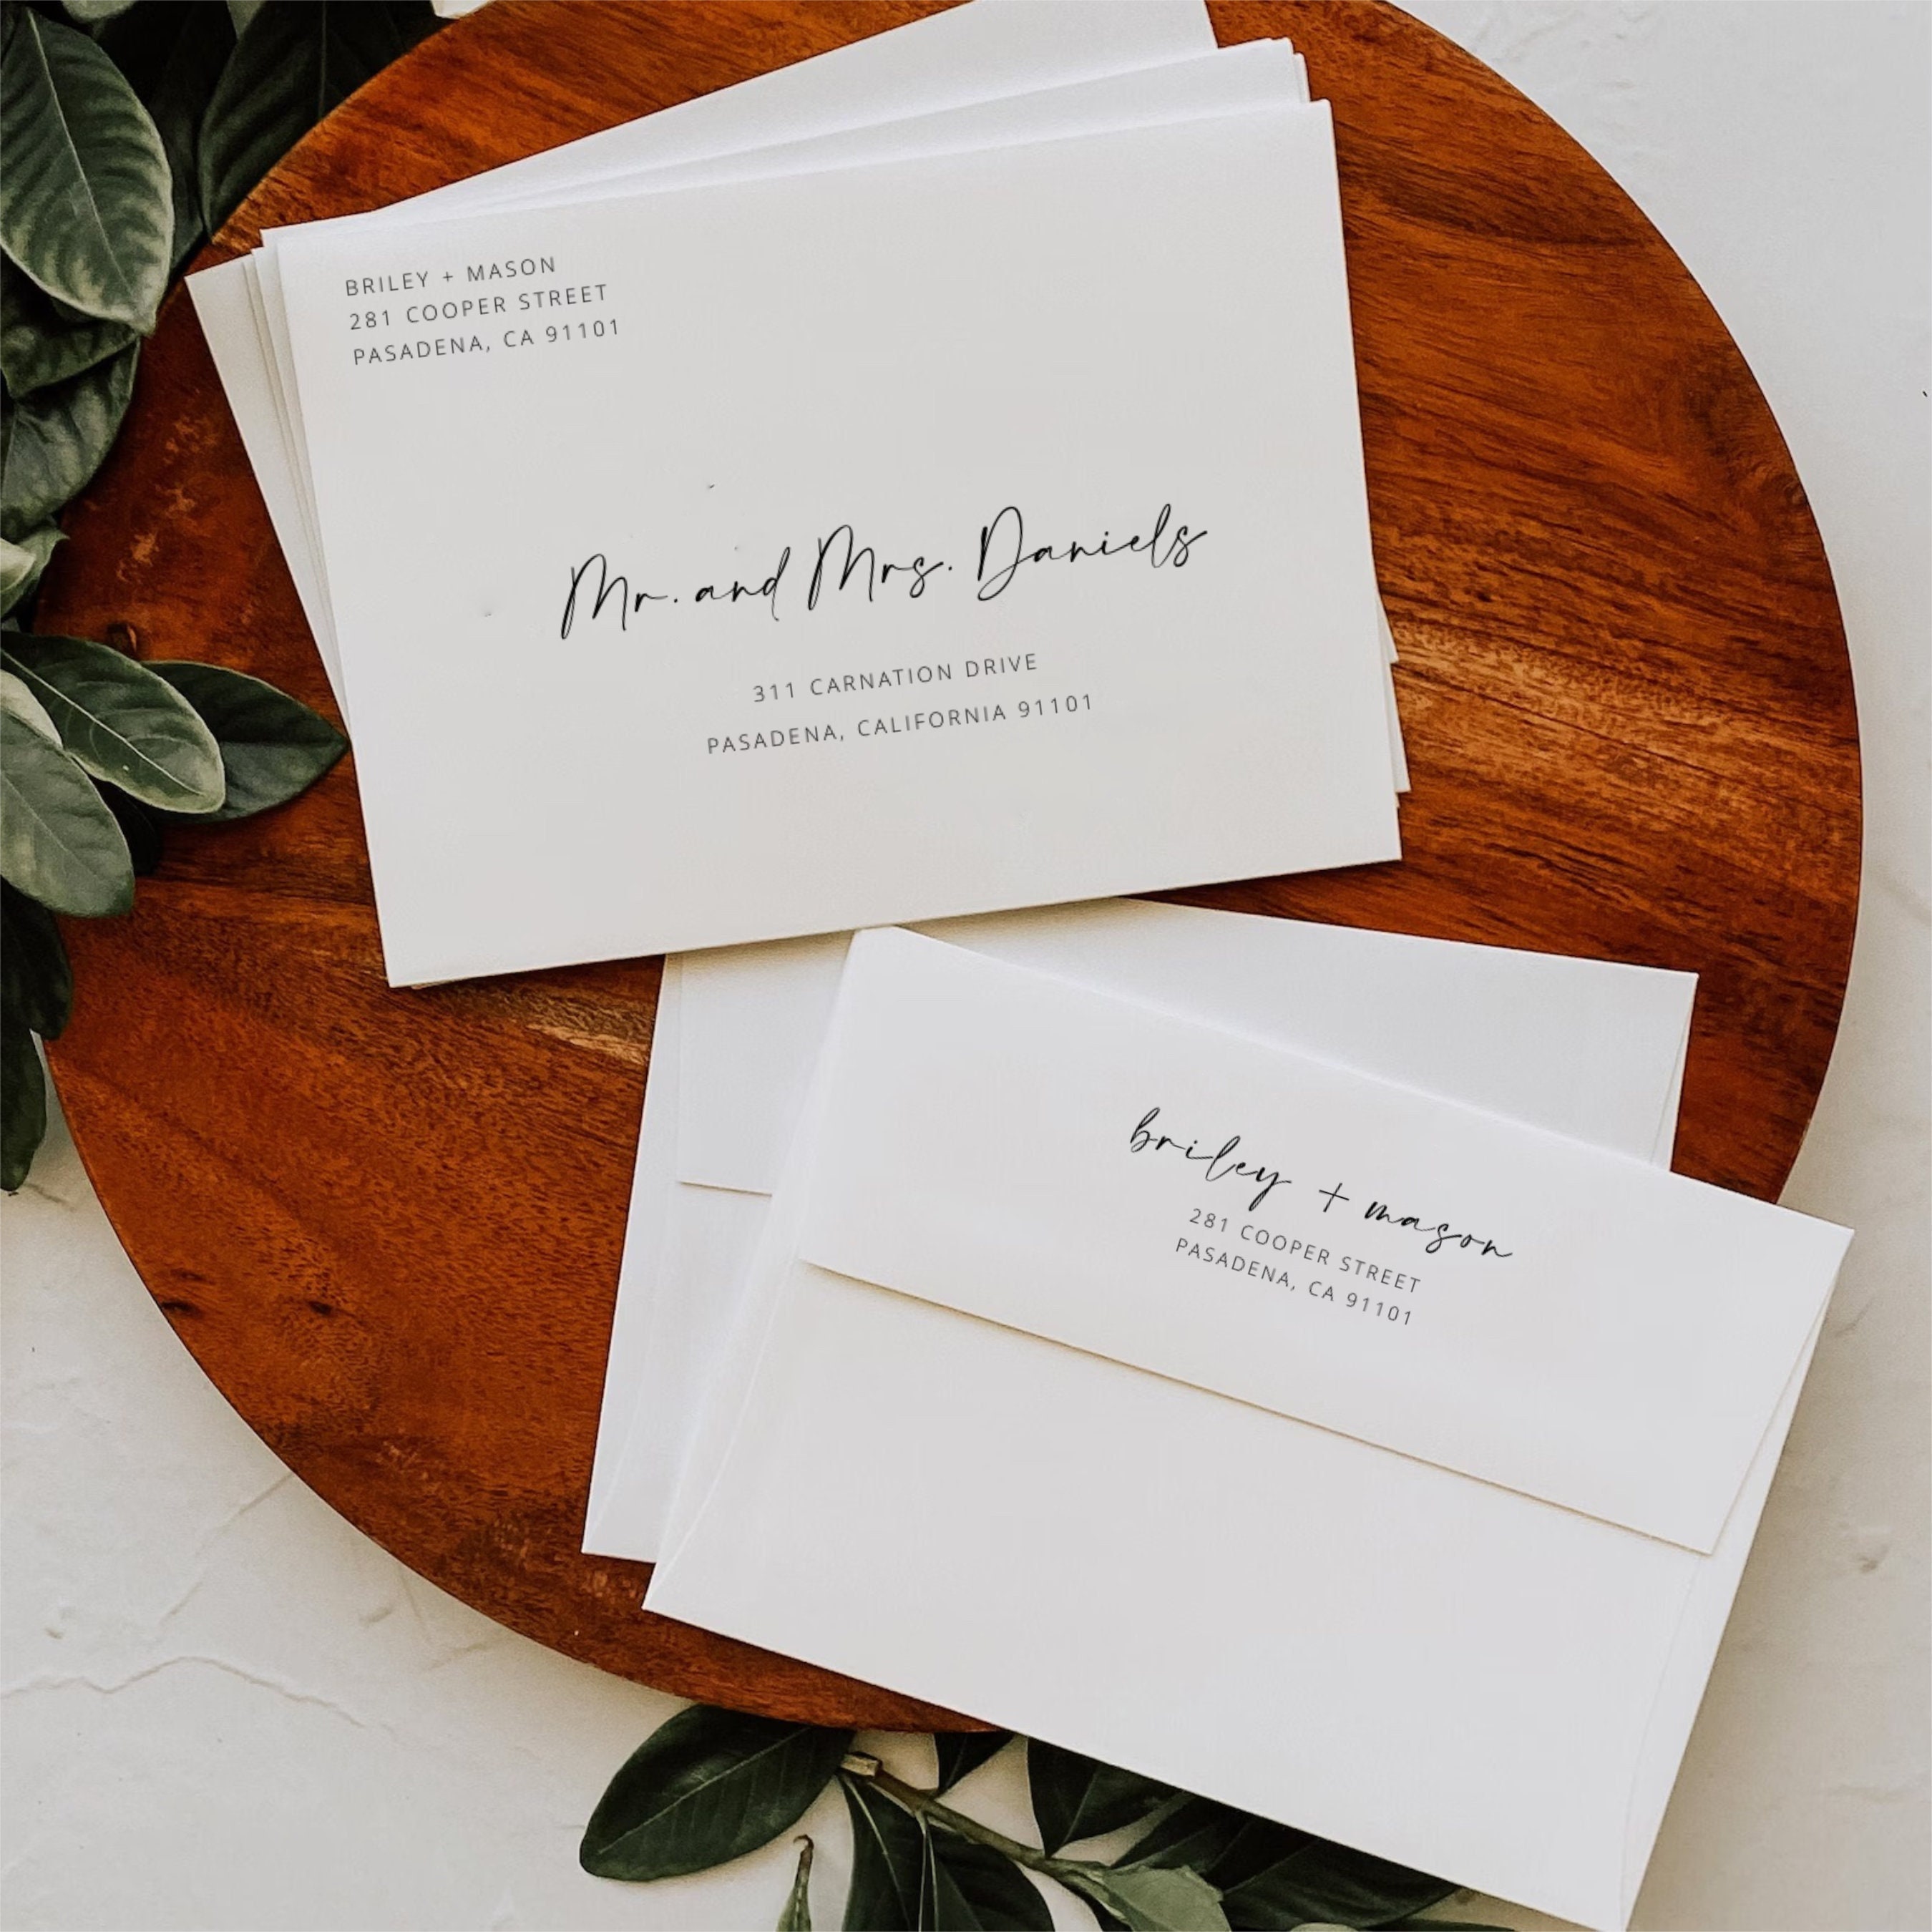 Envelopes for 5 X 7 Invitations, A7 Envelopes 5 1/4 X 7 1/4